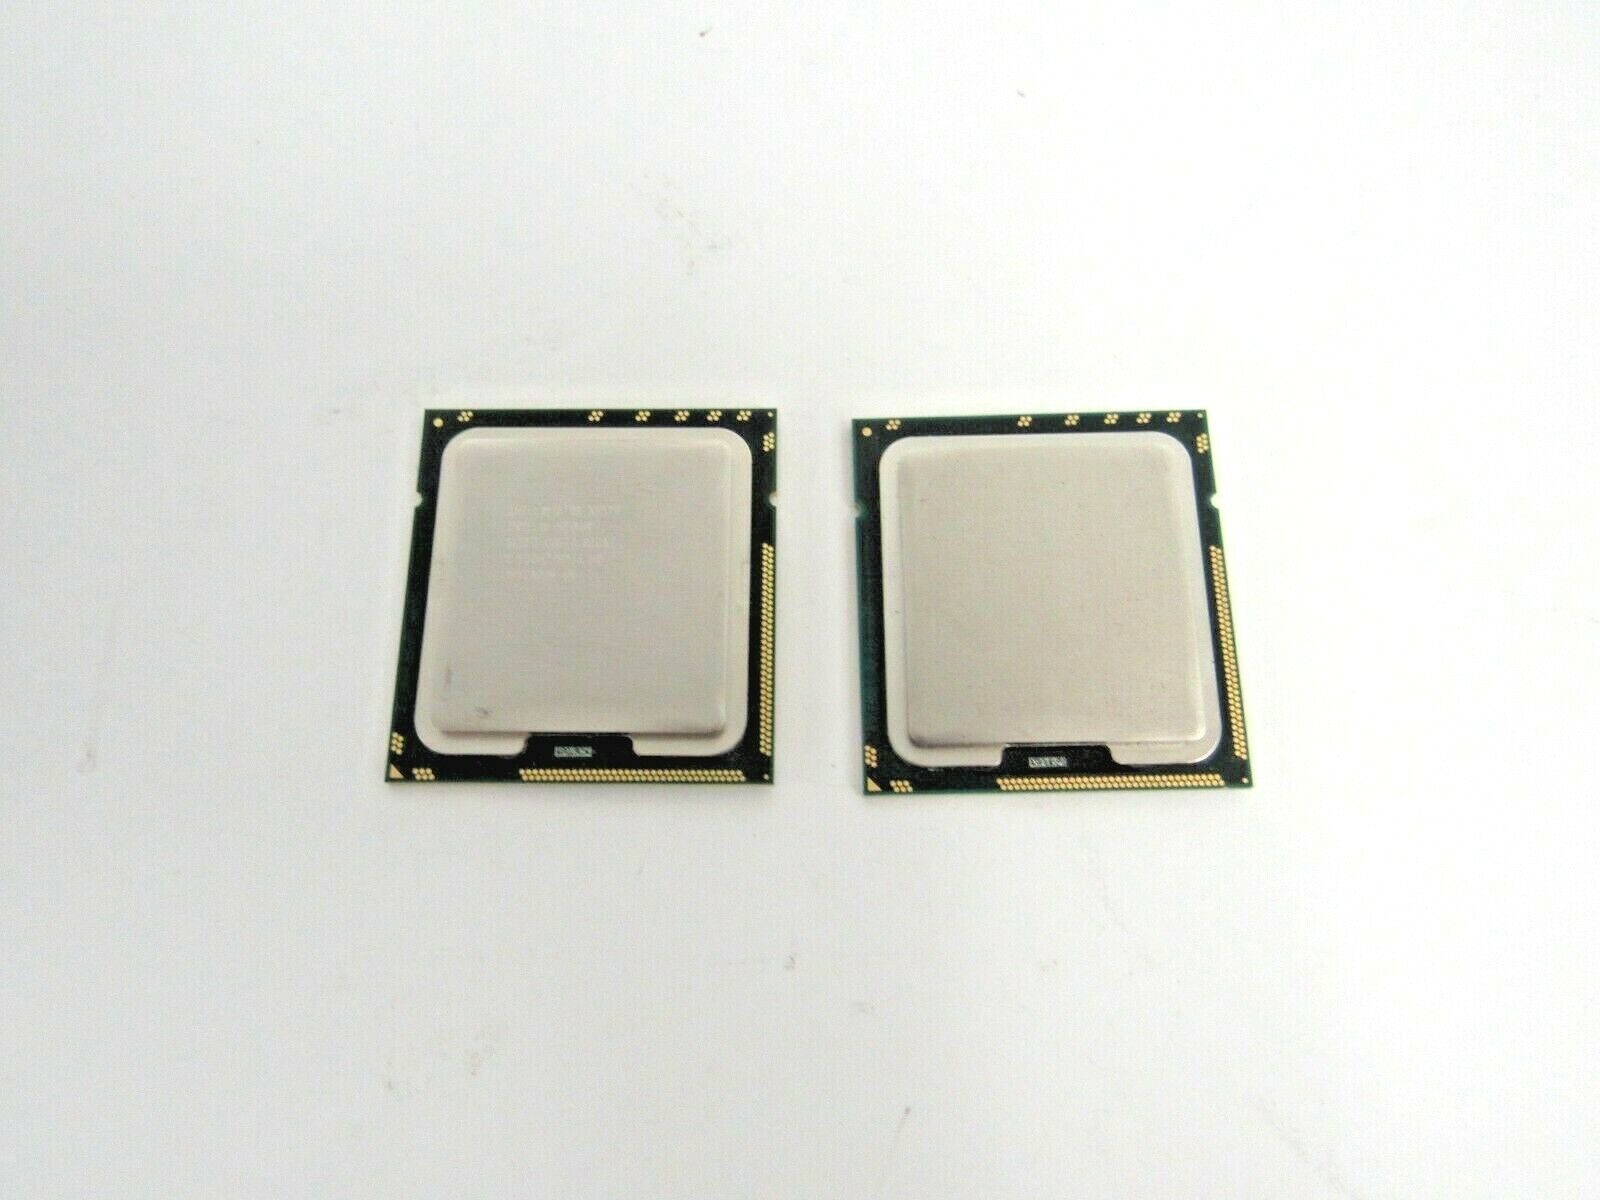 Intel Lot of 2 SLBF3 Xeon X5570 Quad-Core 2.93GHz 6.40GT/s QPI 8MB L3 Cache  A-9 Intel SLBF3, X5570